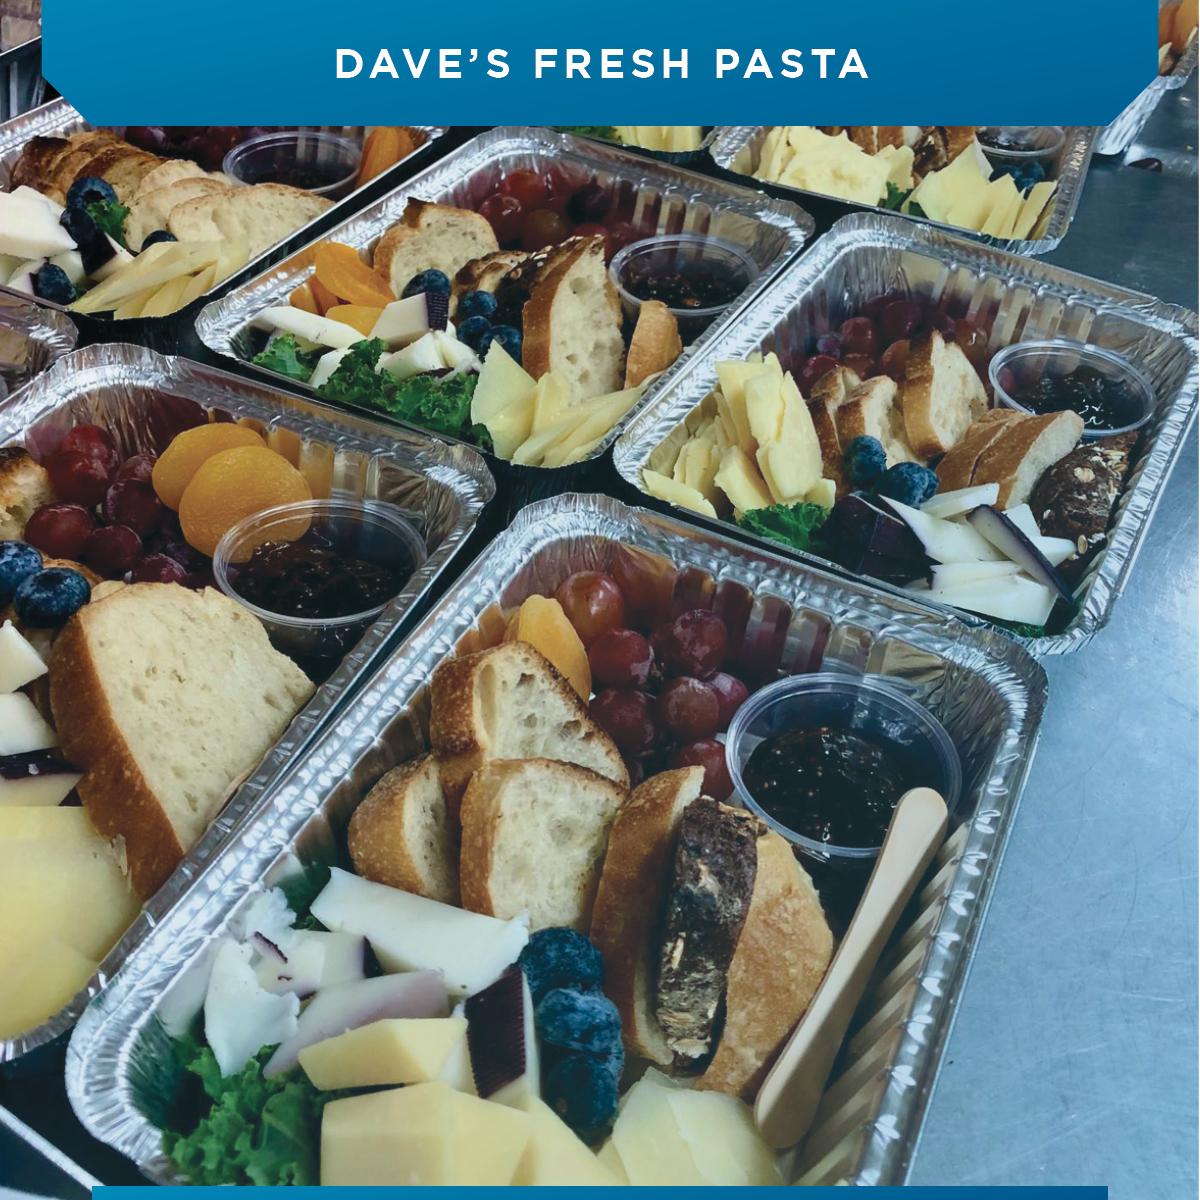 Dave's Fresh Pasta